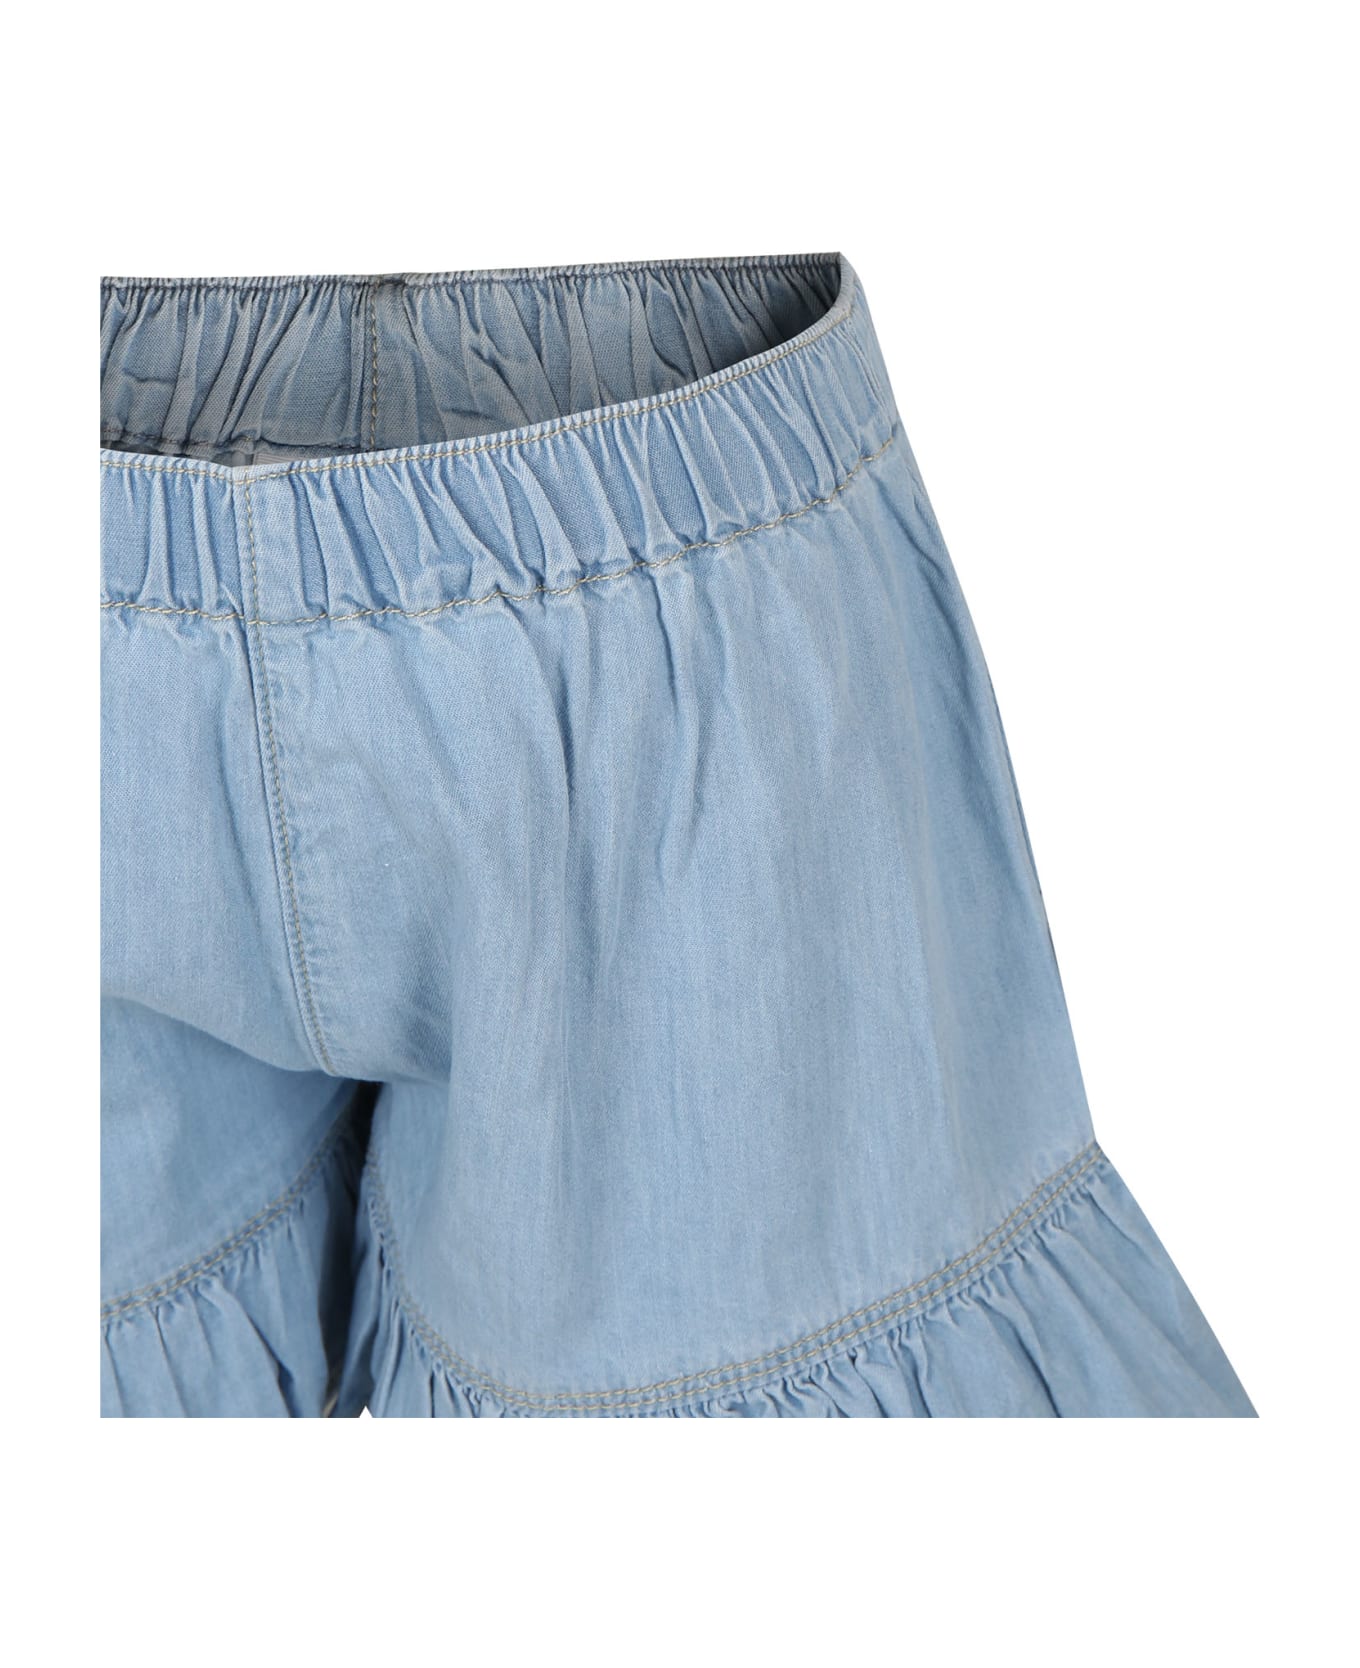 Molo Blue Shorts For Girl - Denim